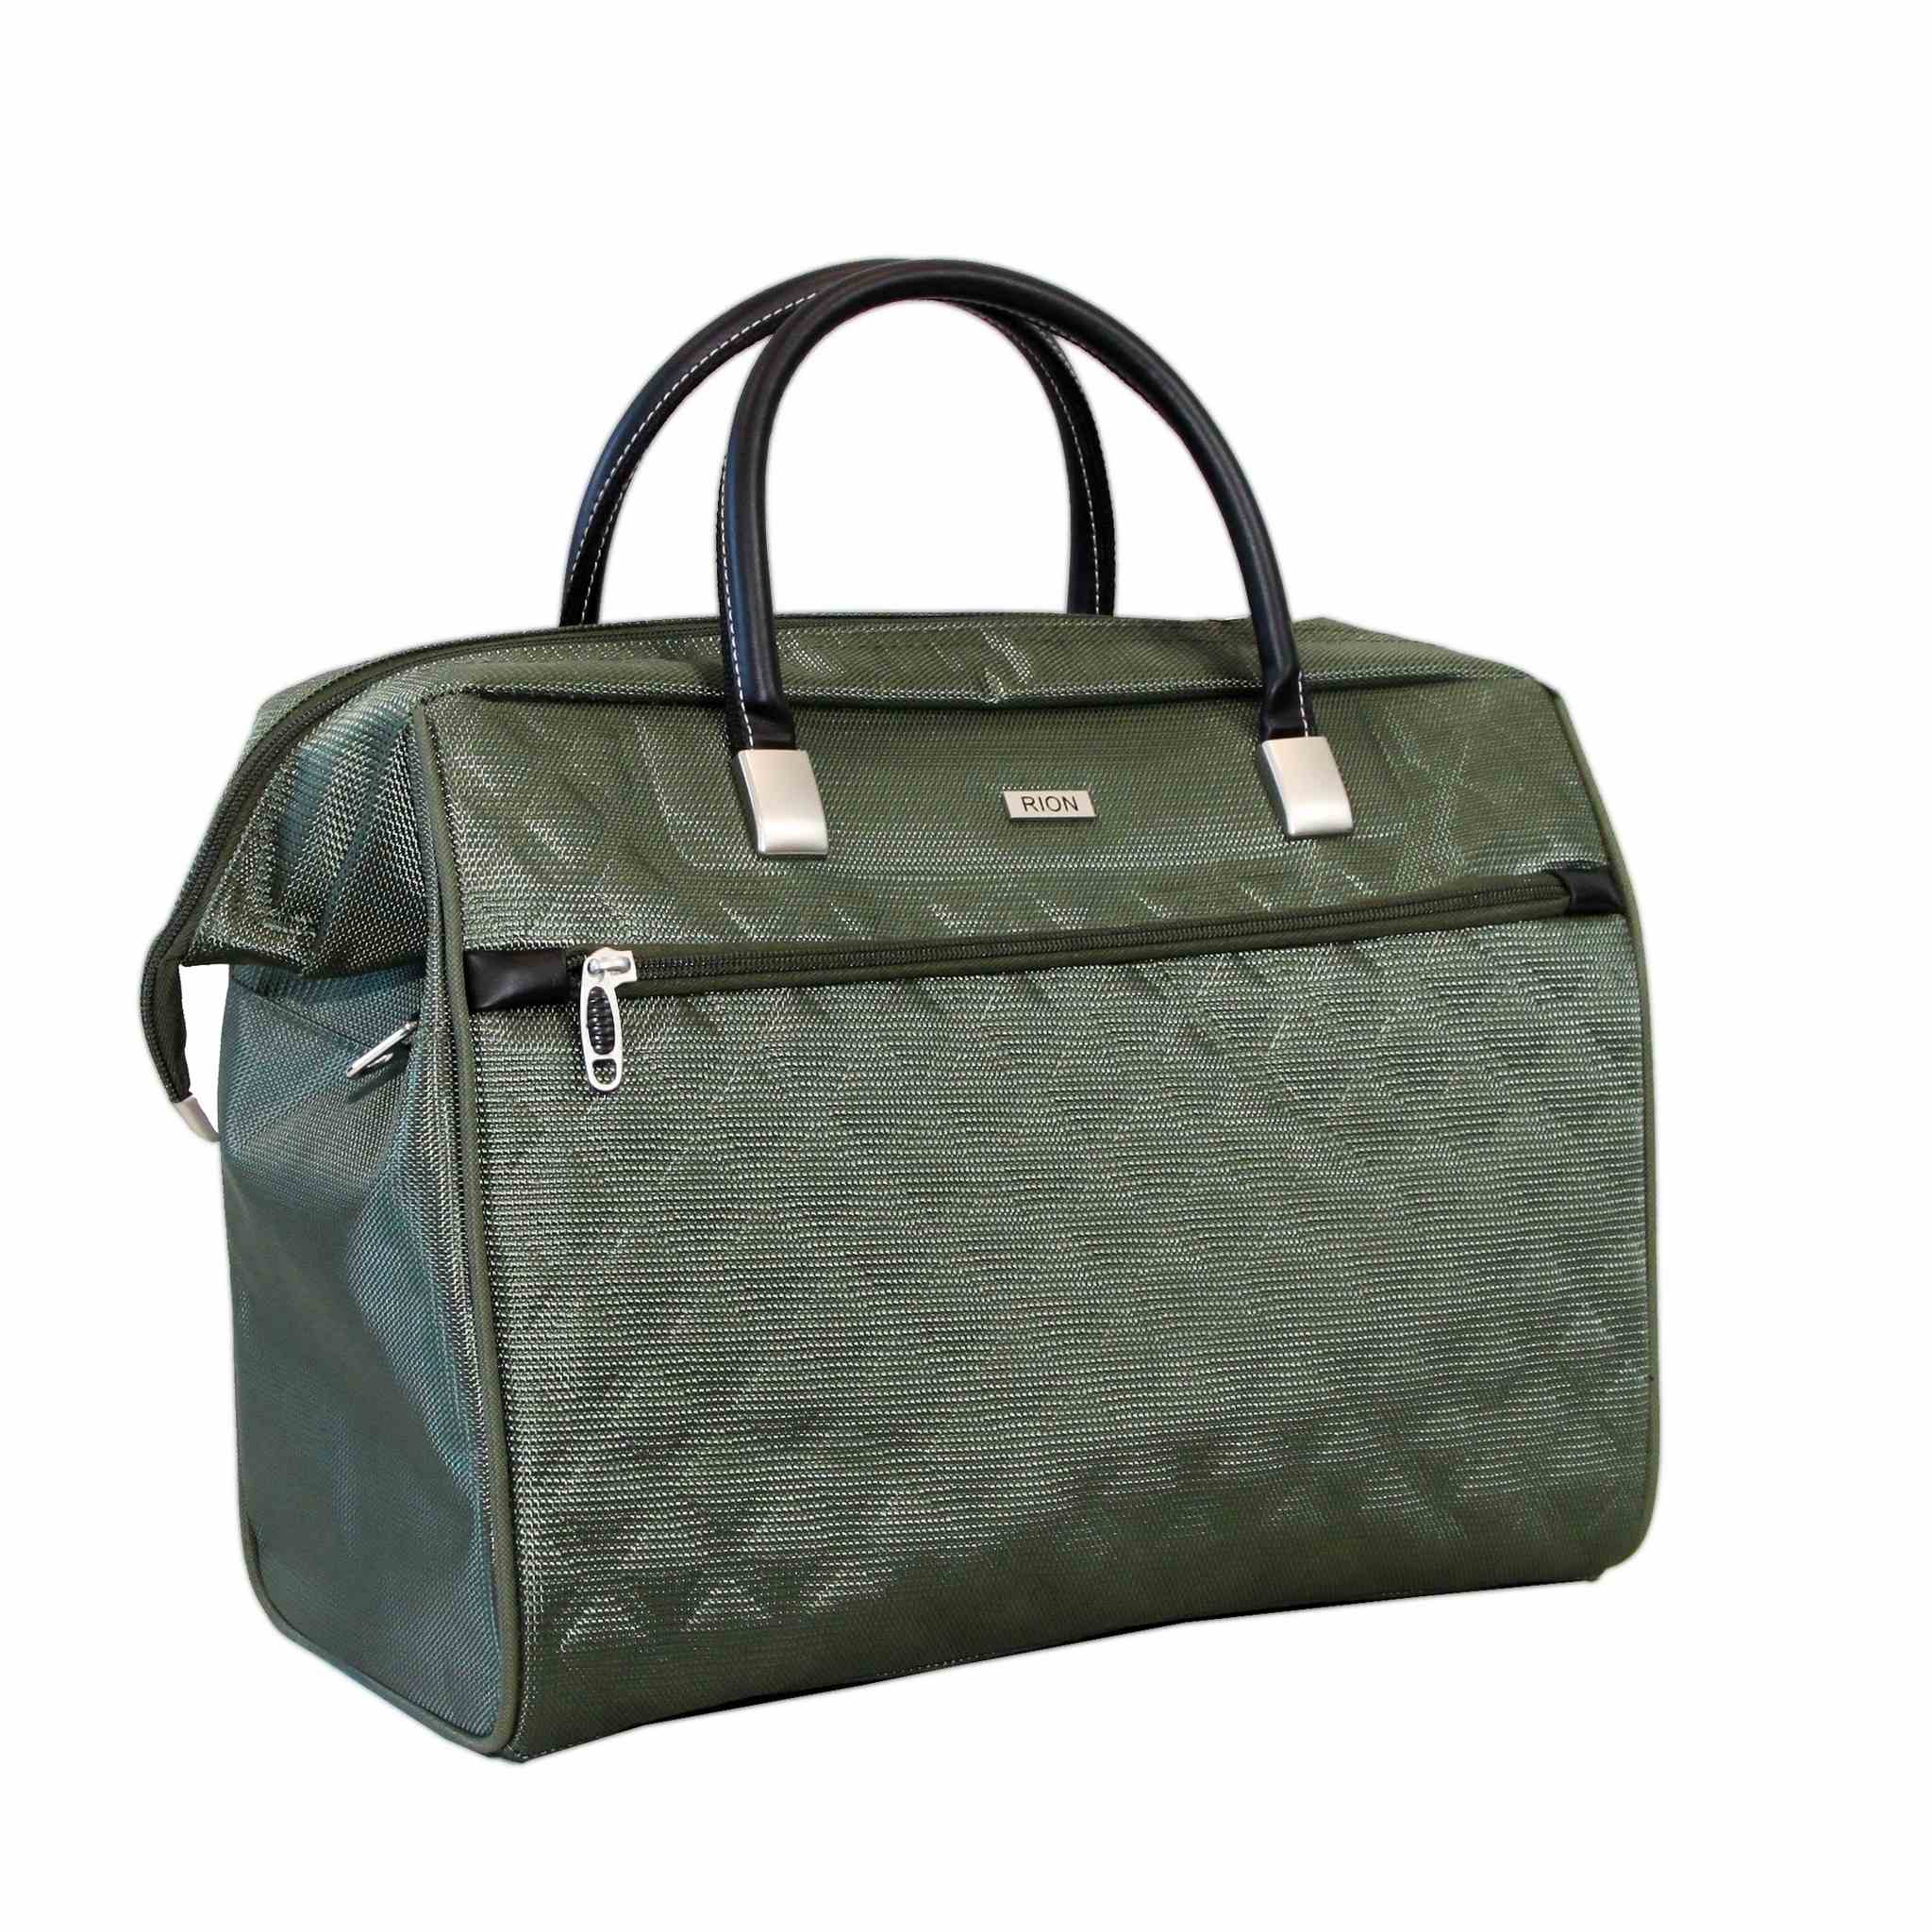 Дорожная сумка унисекс RION+ 233, зеленая